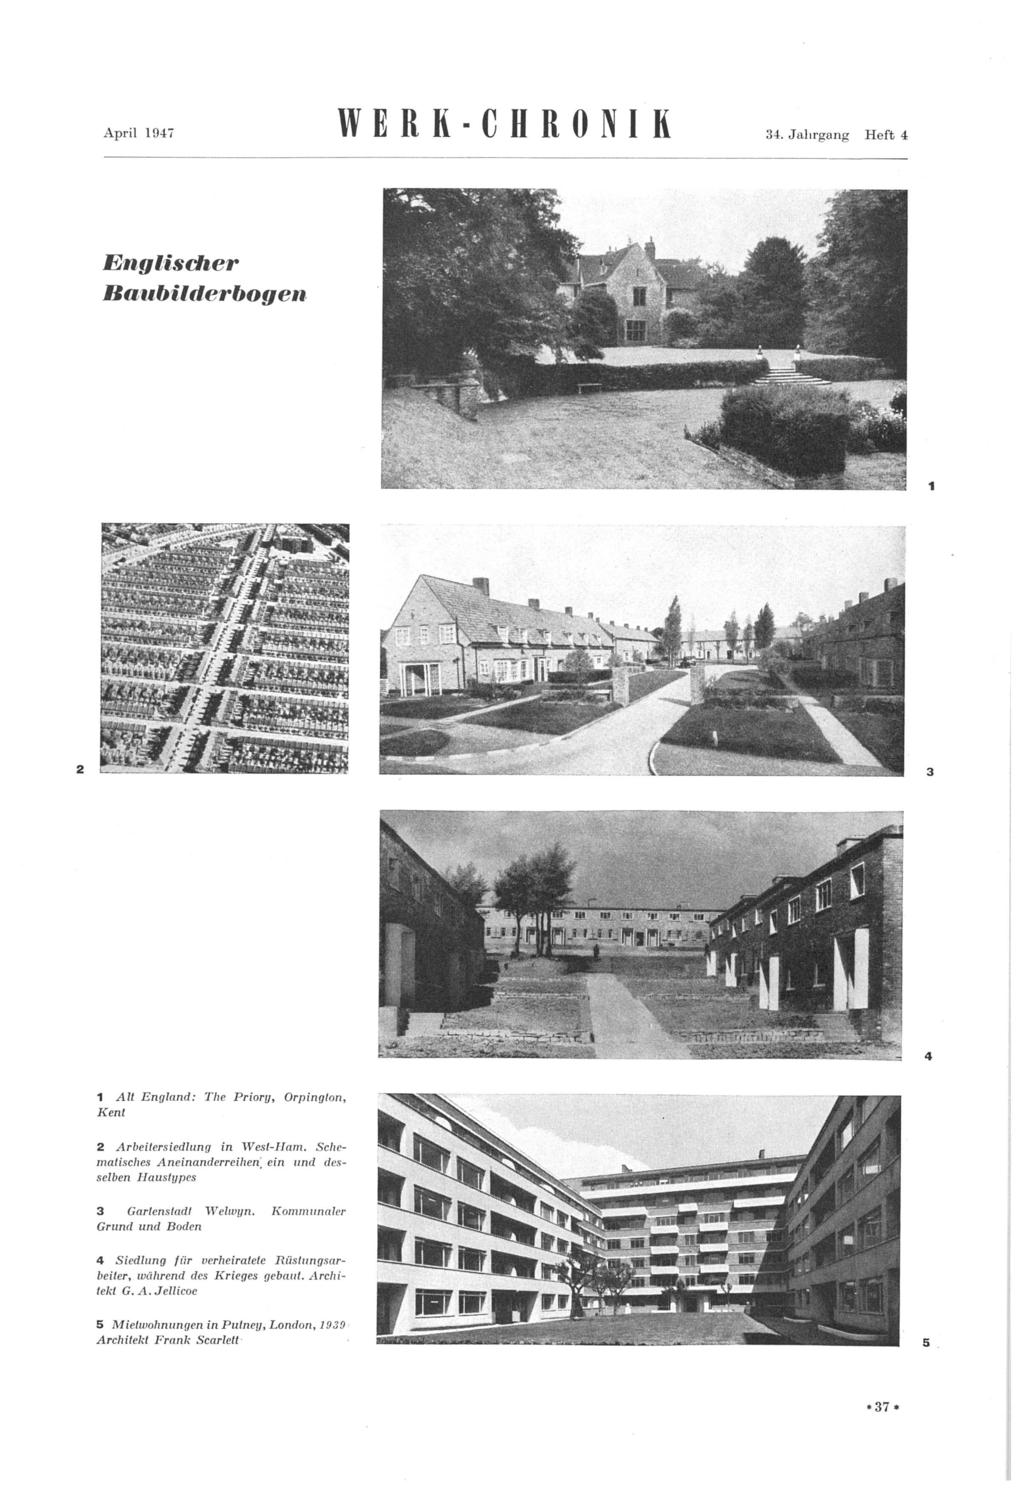 April 1947 WERK-CHRONIK 34. Jahrgang Heft 4 Englischer Haubilderbogen 4^ if -Trt'jX r^w^i **^*wkäfcfj J^^^^^^öä l?k4 ~ '* «ü liir SÄ ^ : rmr l -uj a-s^s^iä*.